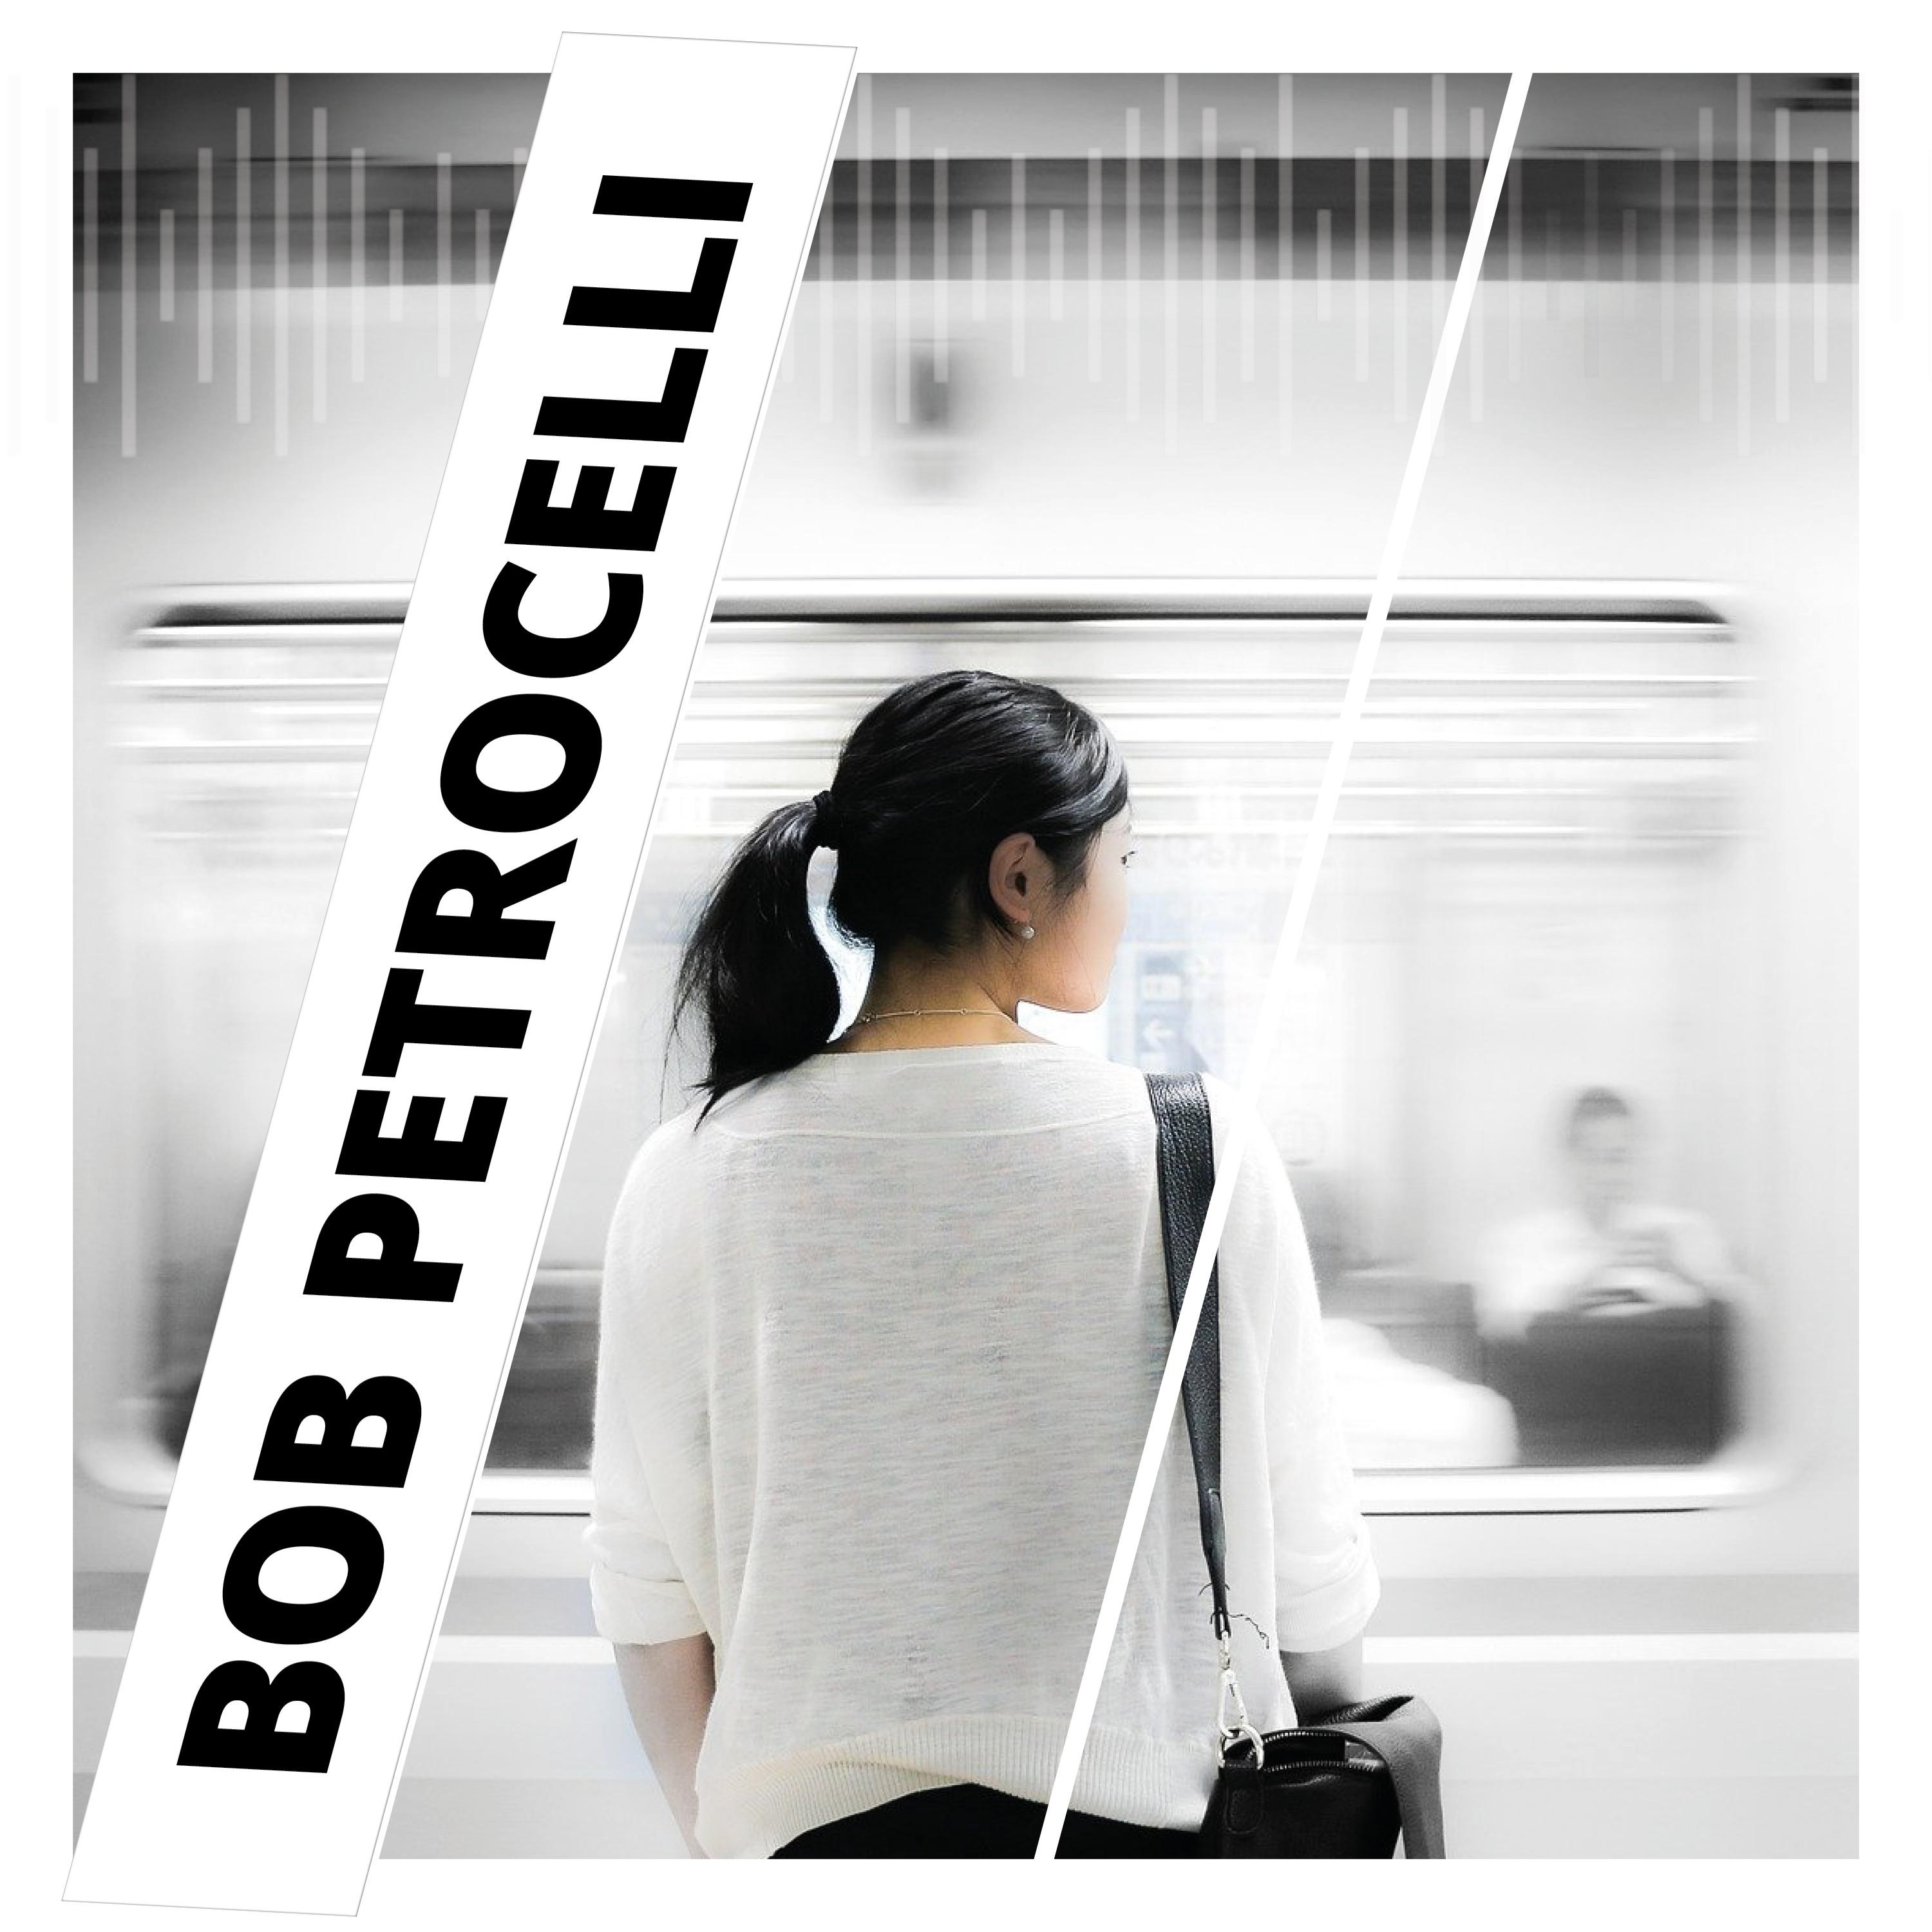 Bob Petrocelli - Passing the Time